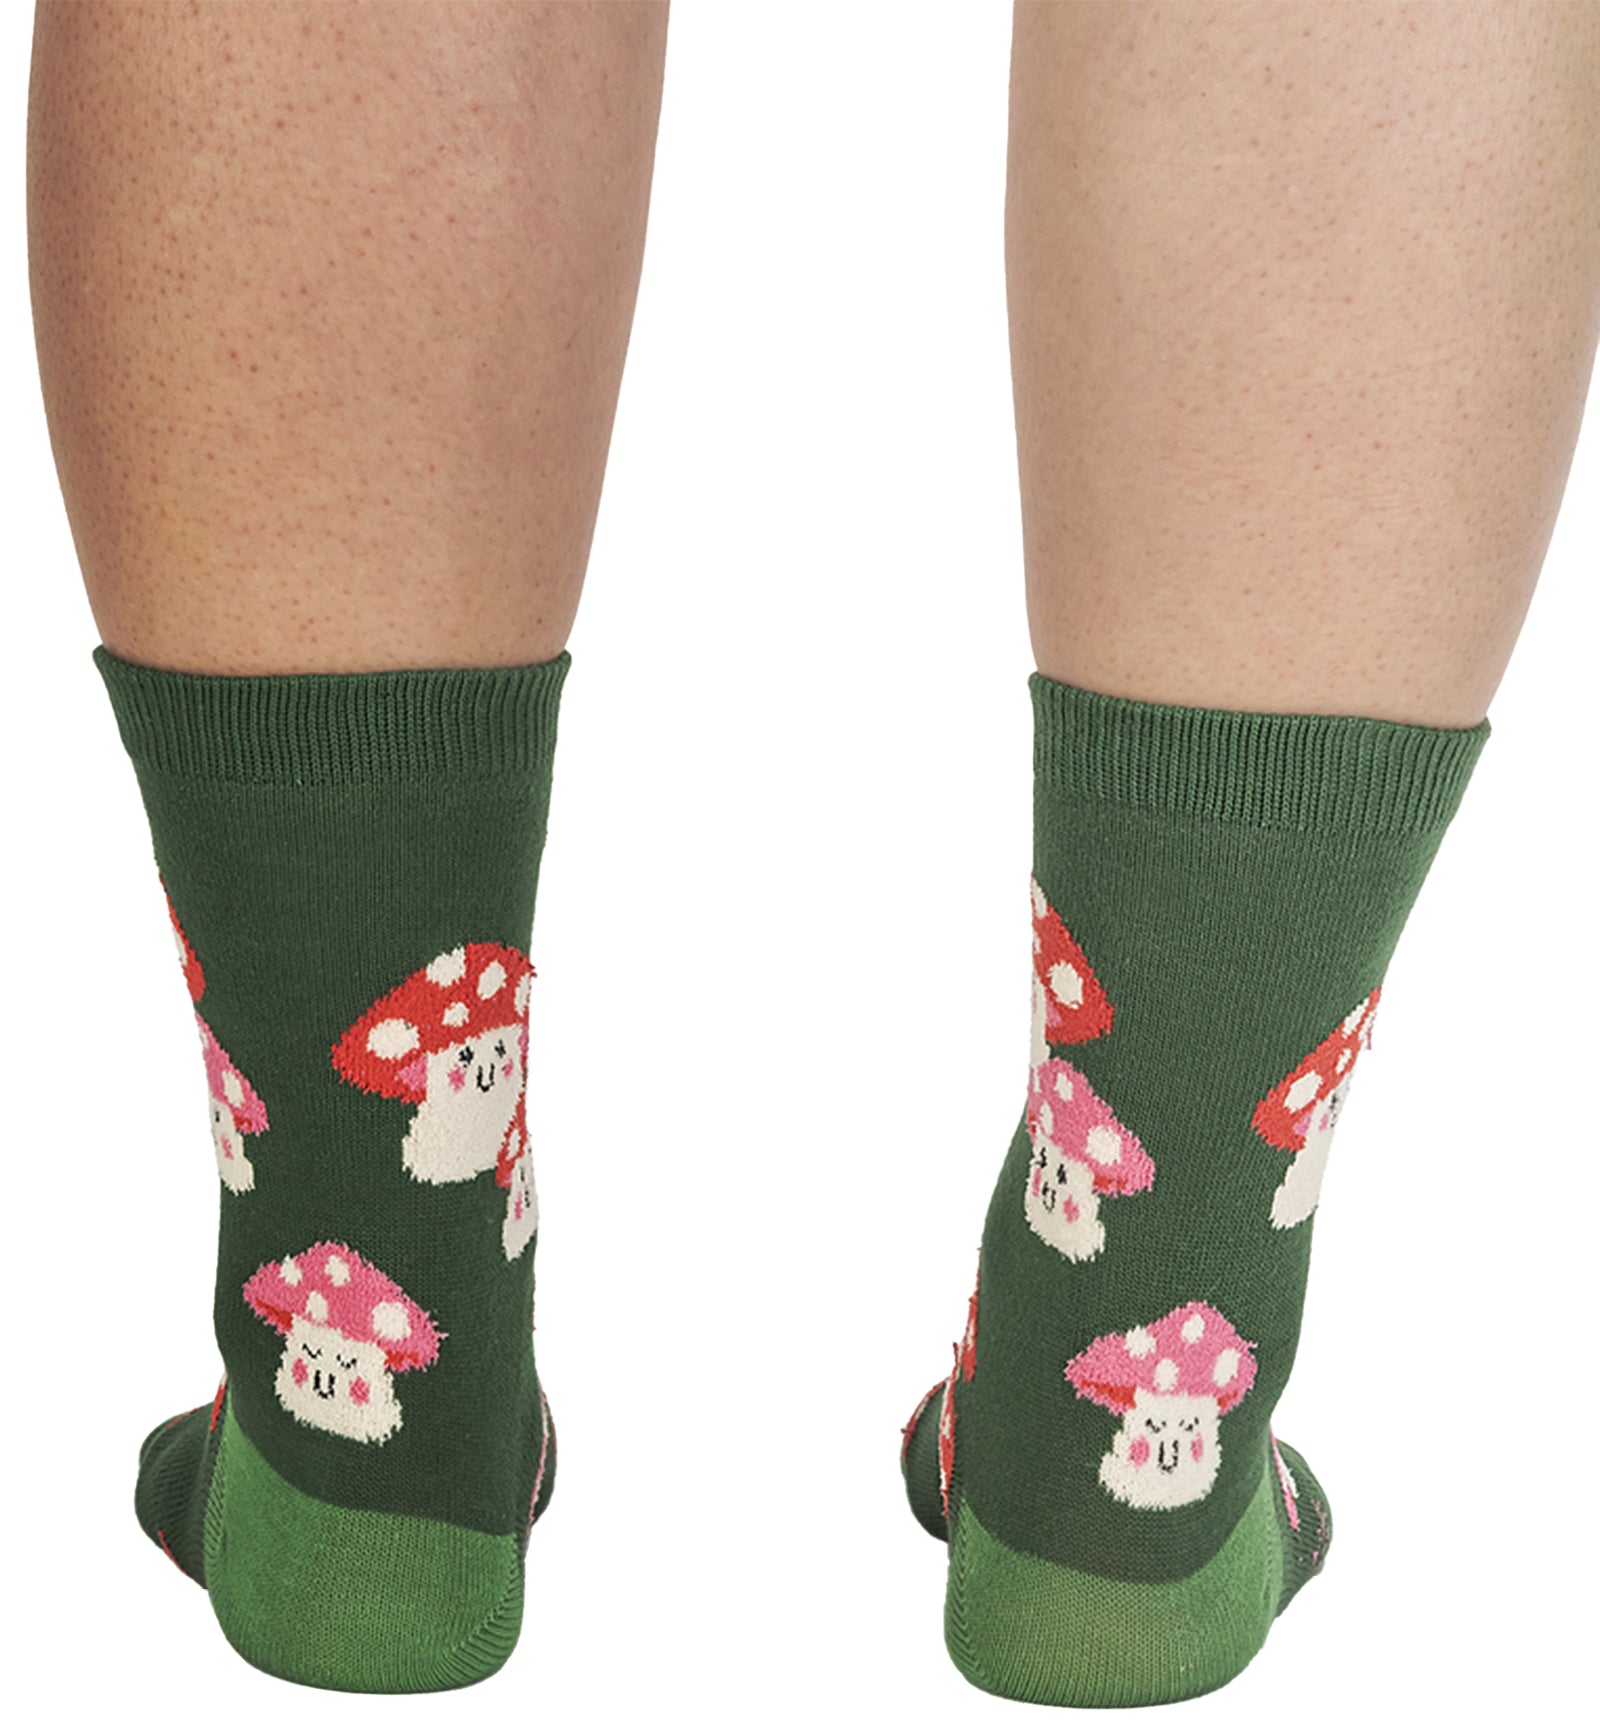 SOCK it to me Women's Crew Socks (W0455),Mellow Mushrooms - Mellow Mushrooms,One Size